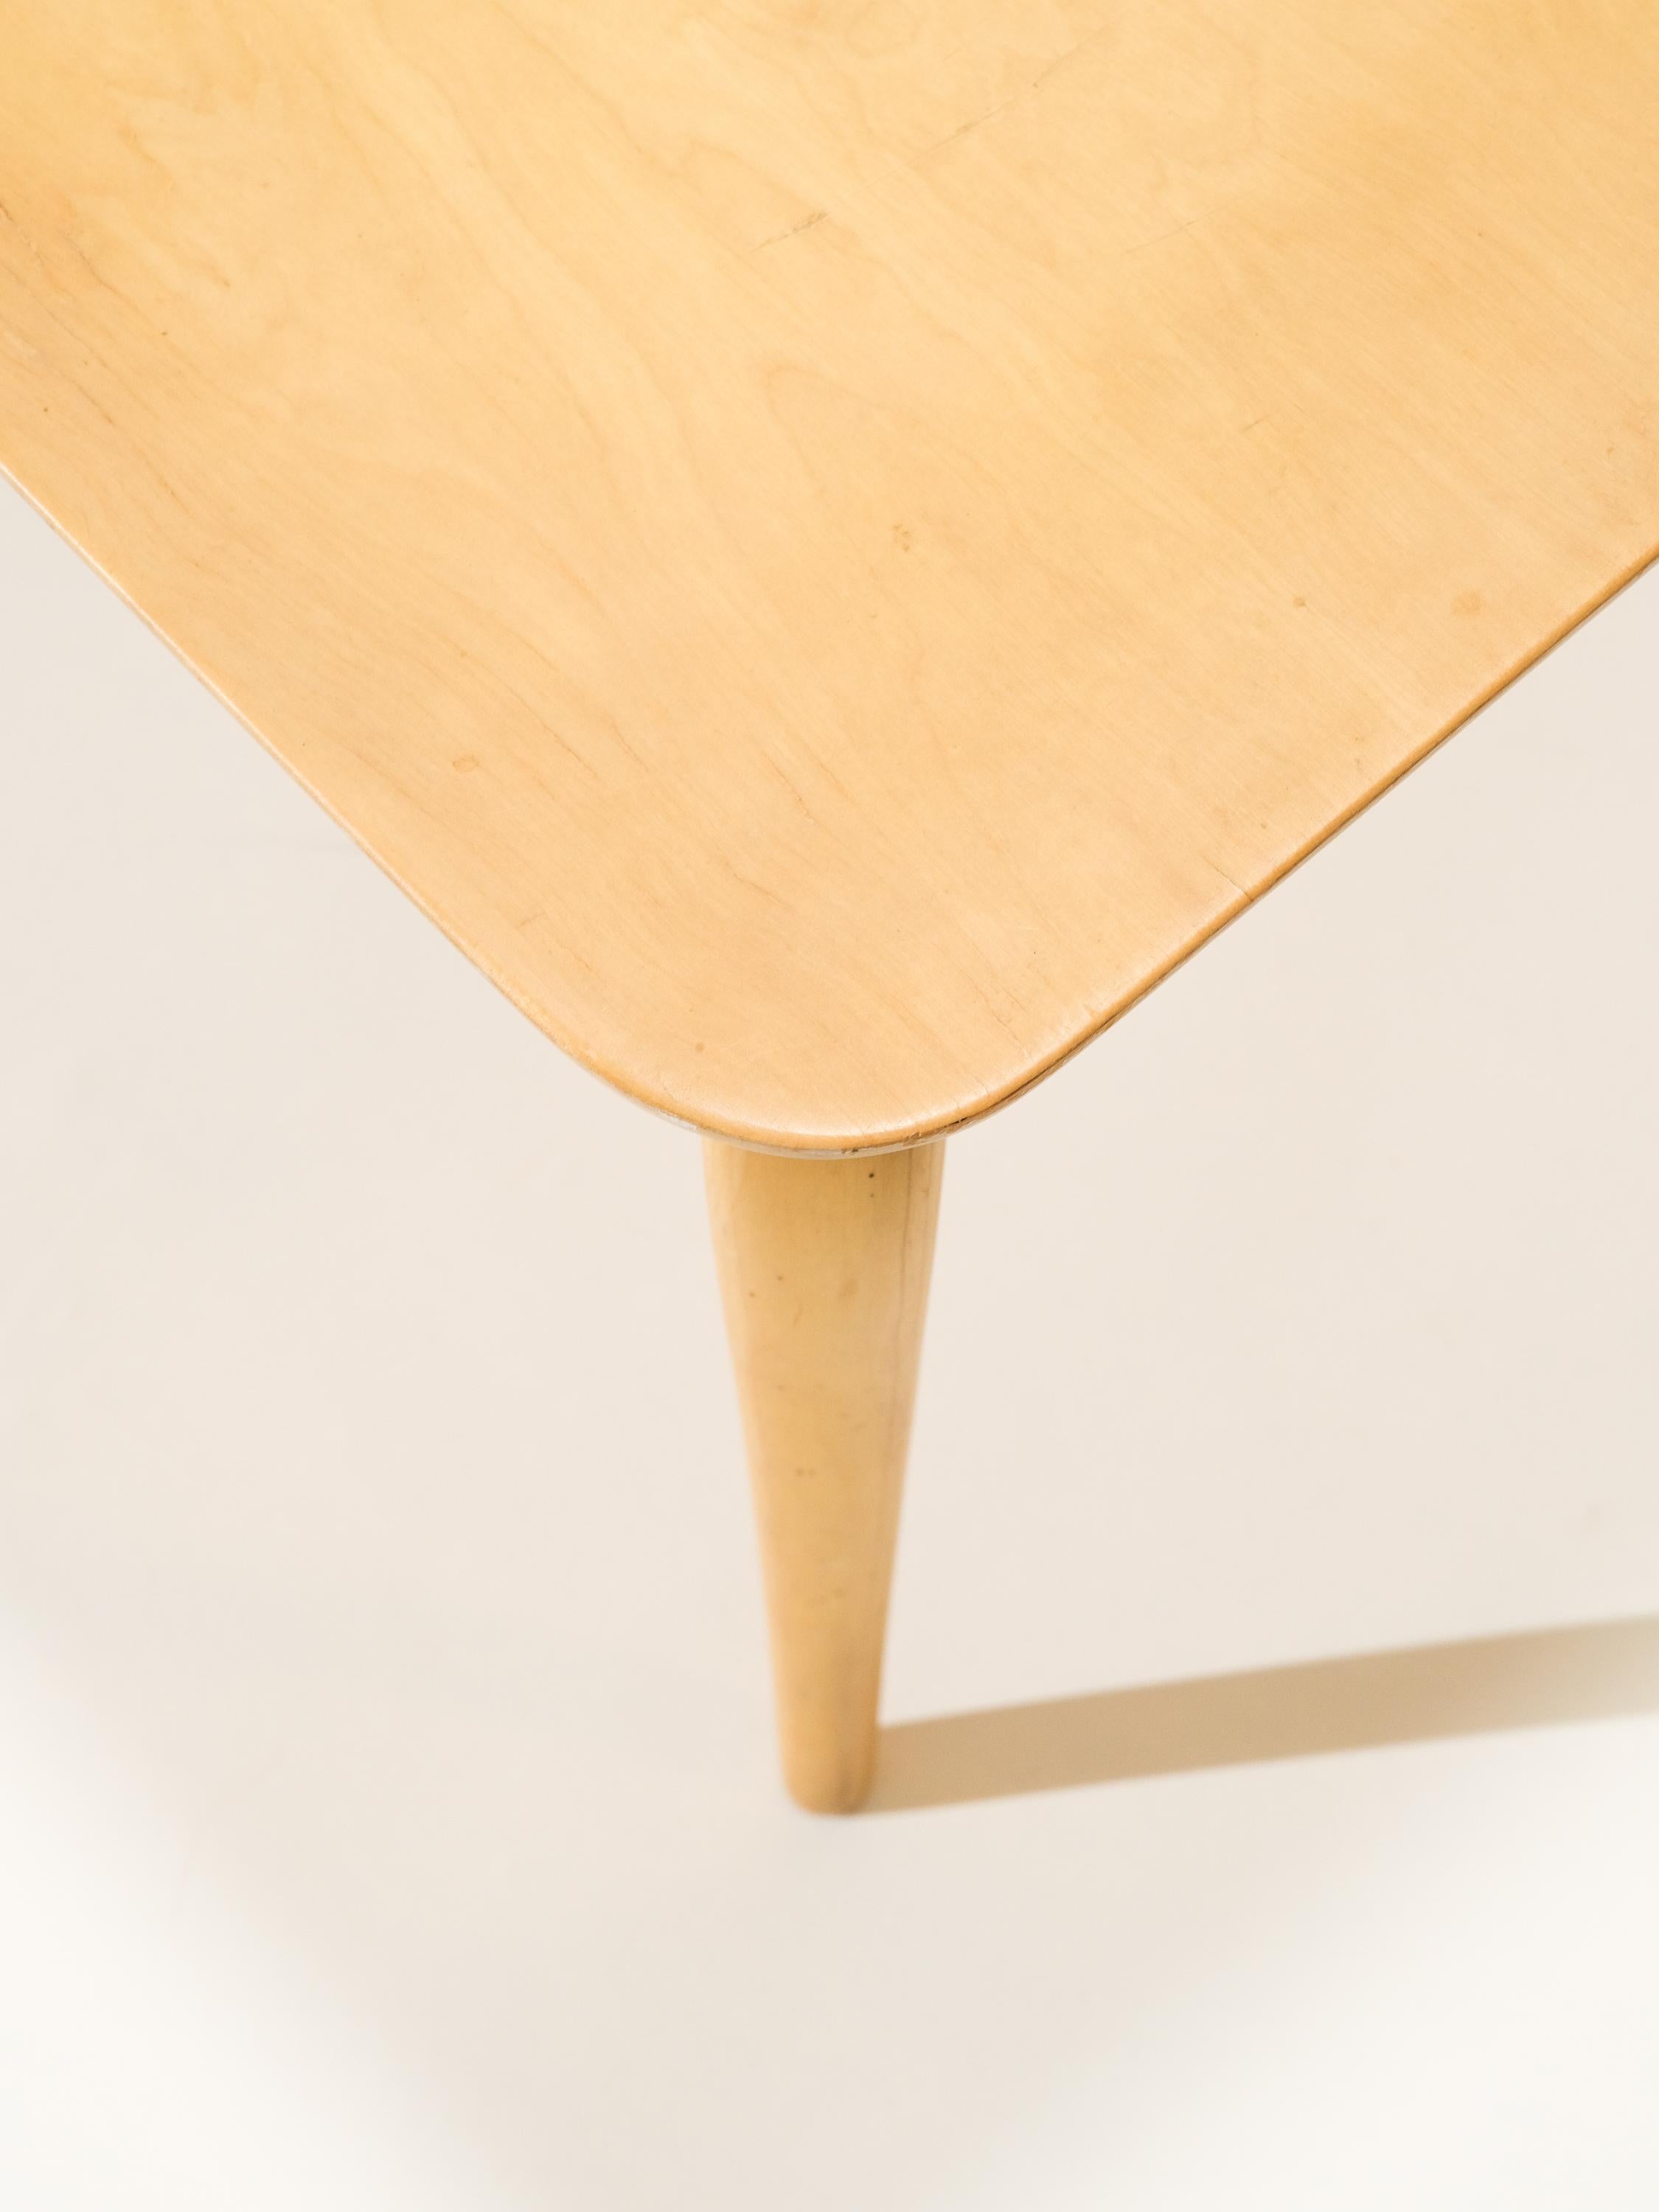 Birch Side Table “Annika” by Bruno Mathsson for Karl Mathsson, Sweden, 1960s For Sale 3